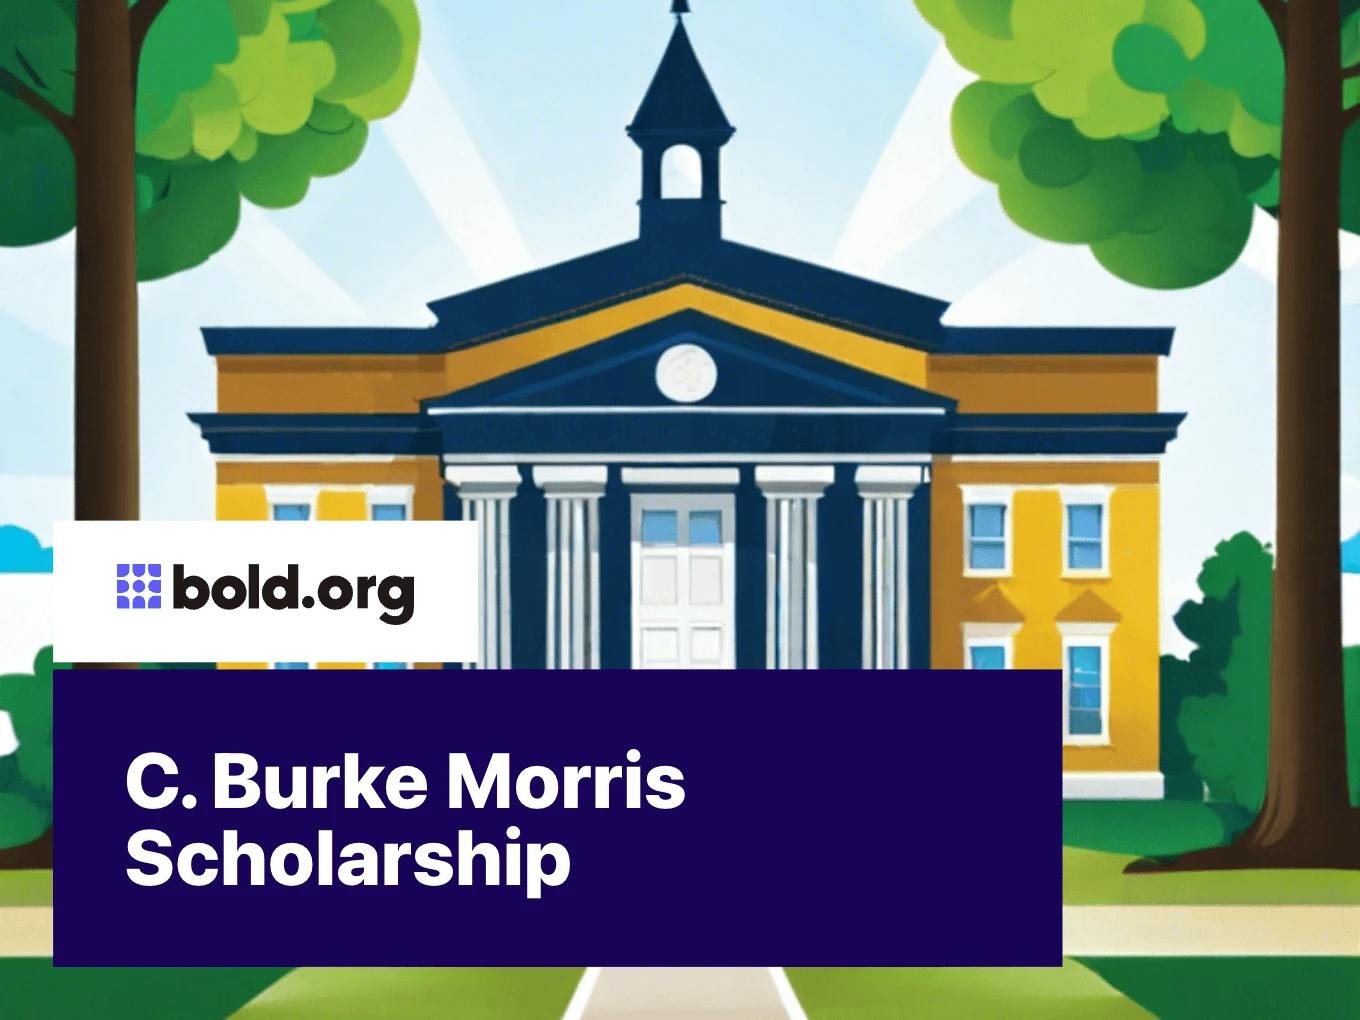 C. Burke Morris Scholarship